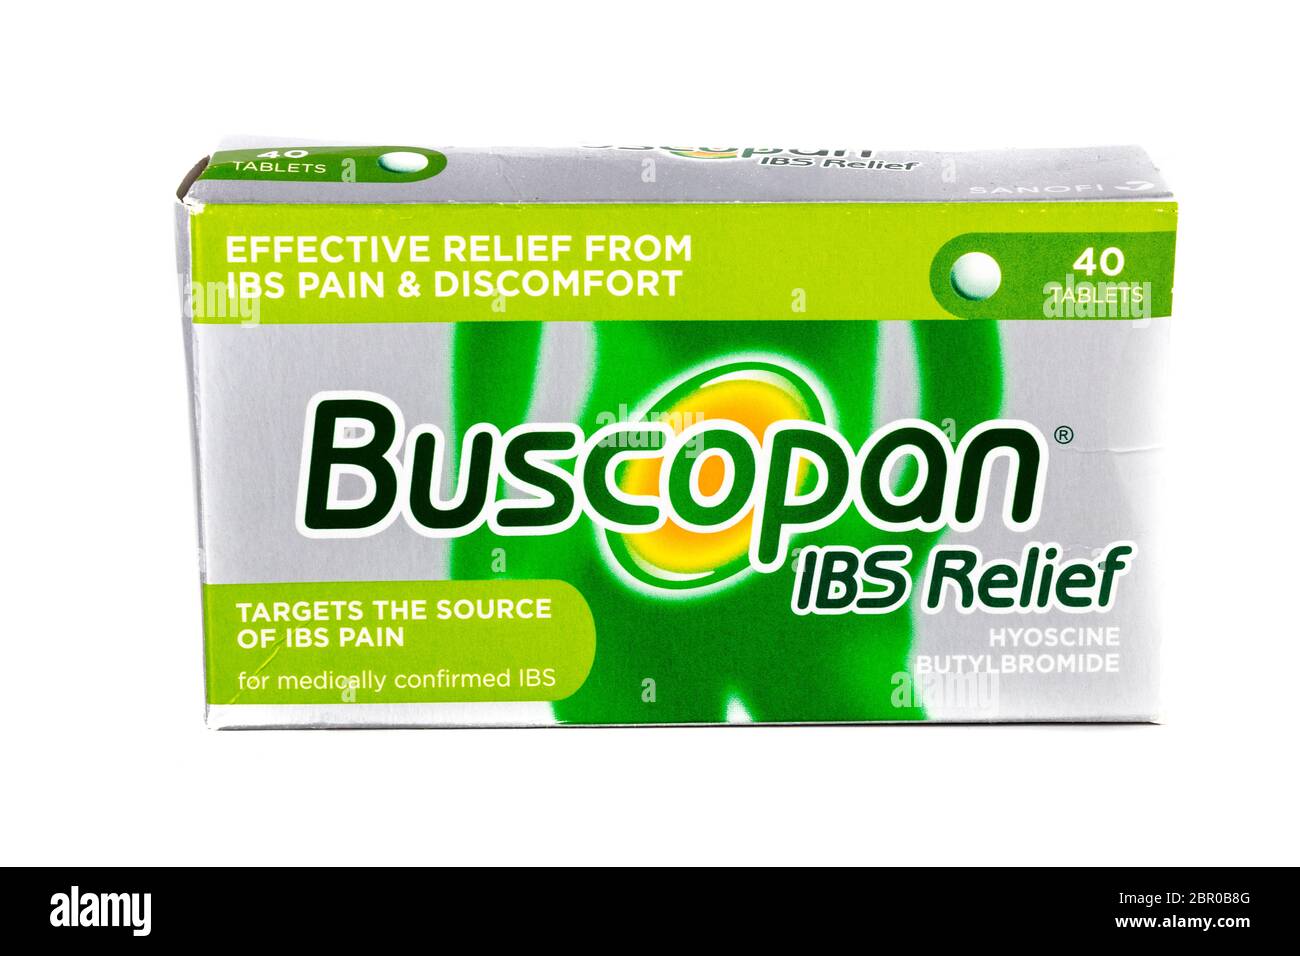 Ibuprofen buscopan Hyoscine butylbromide: